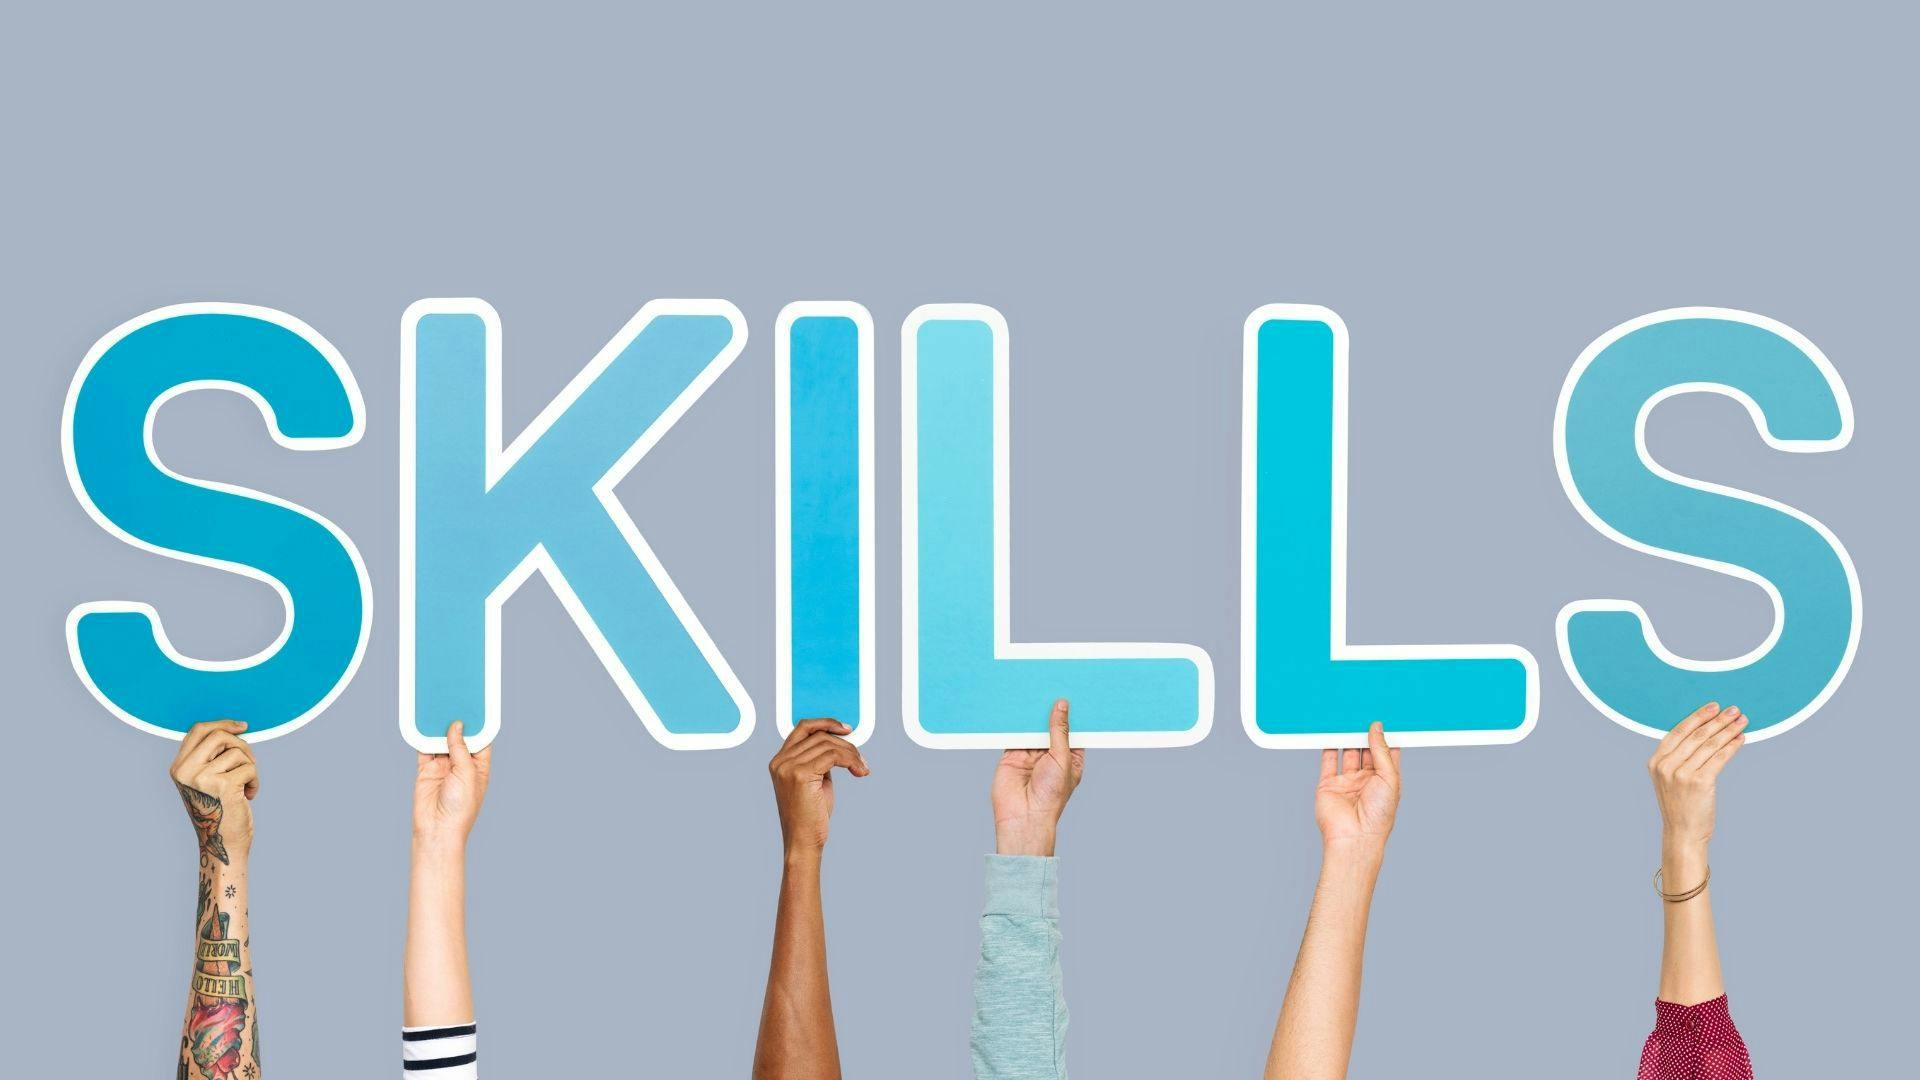 8 Basic Skills Every Employee Should Have